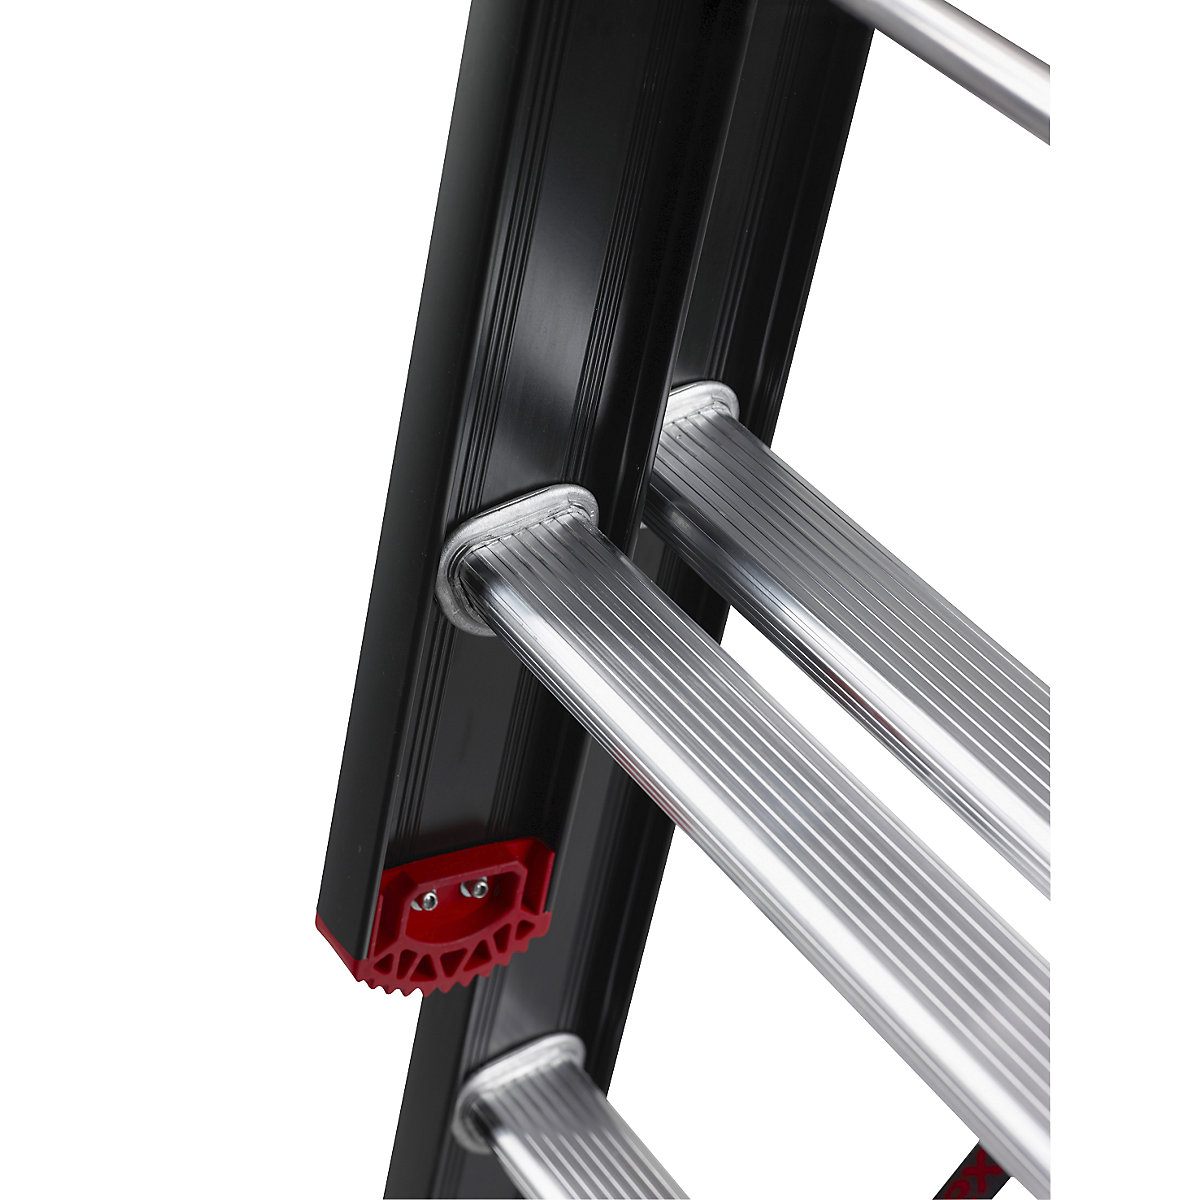 Escalera multiusos, revestida de aluminio – Altrex (Imagen del producto 27)-26